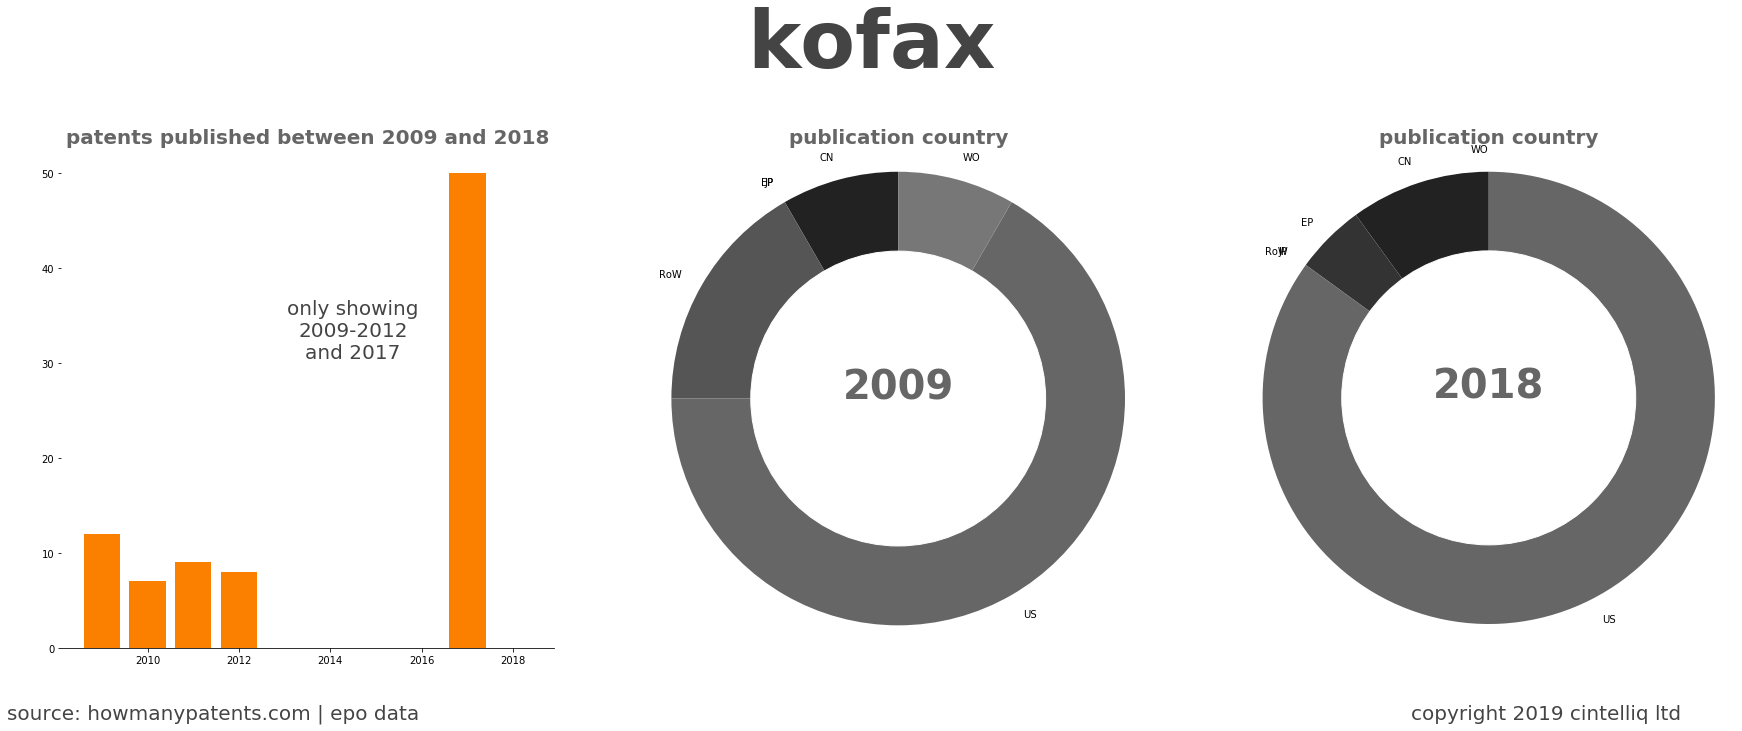 summary of patents for Kofax